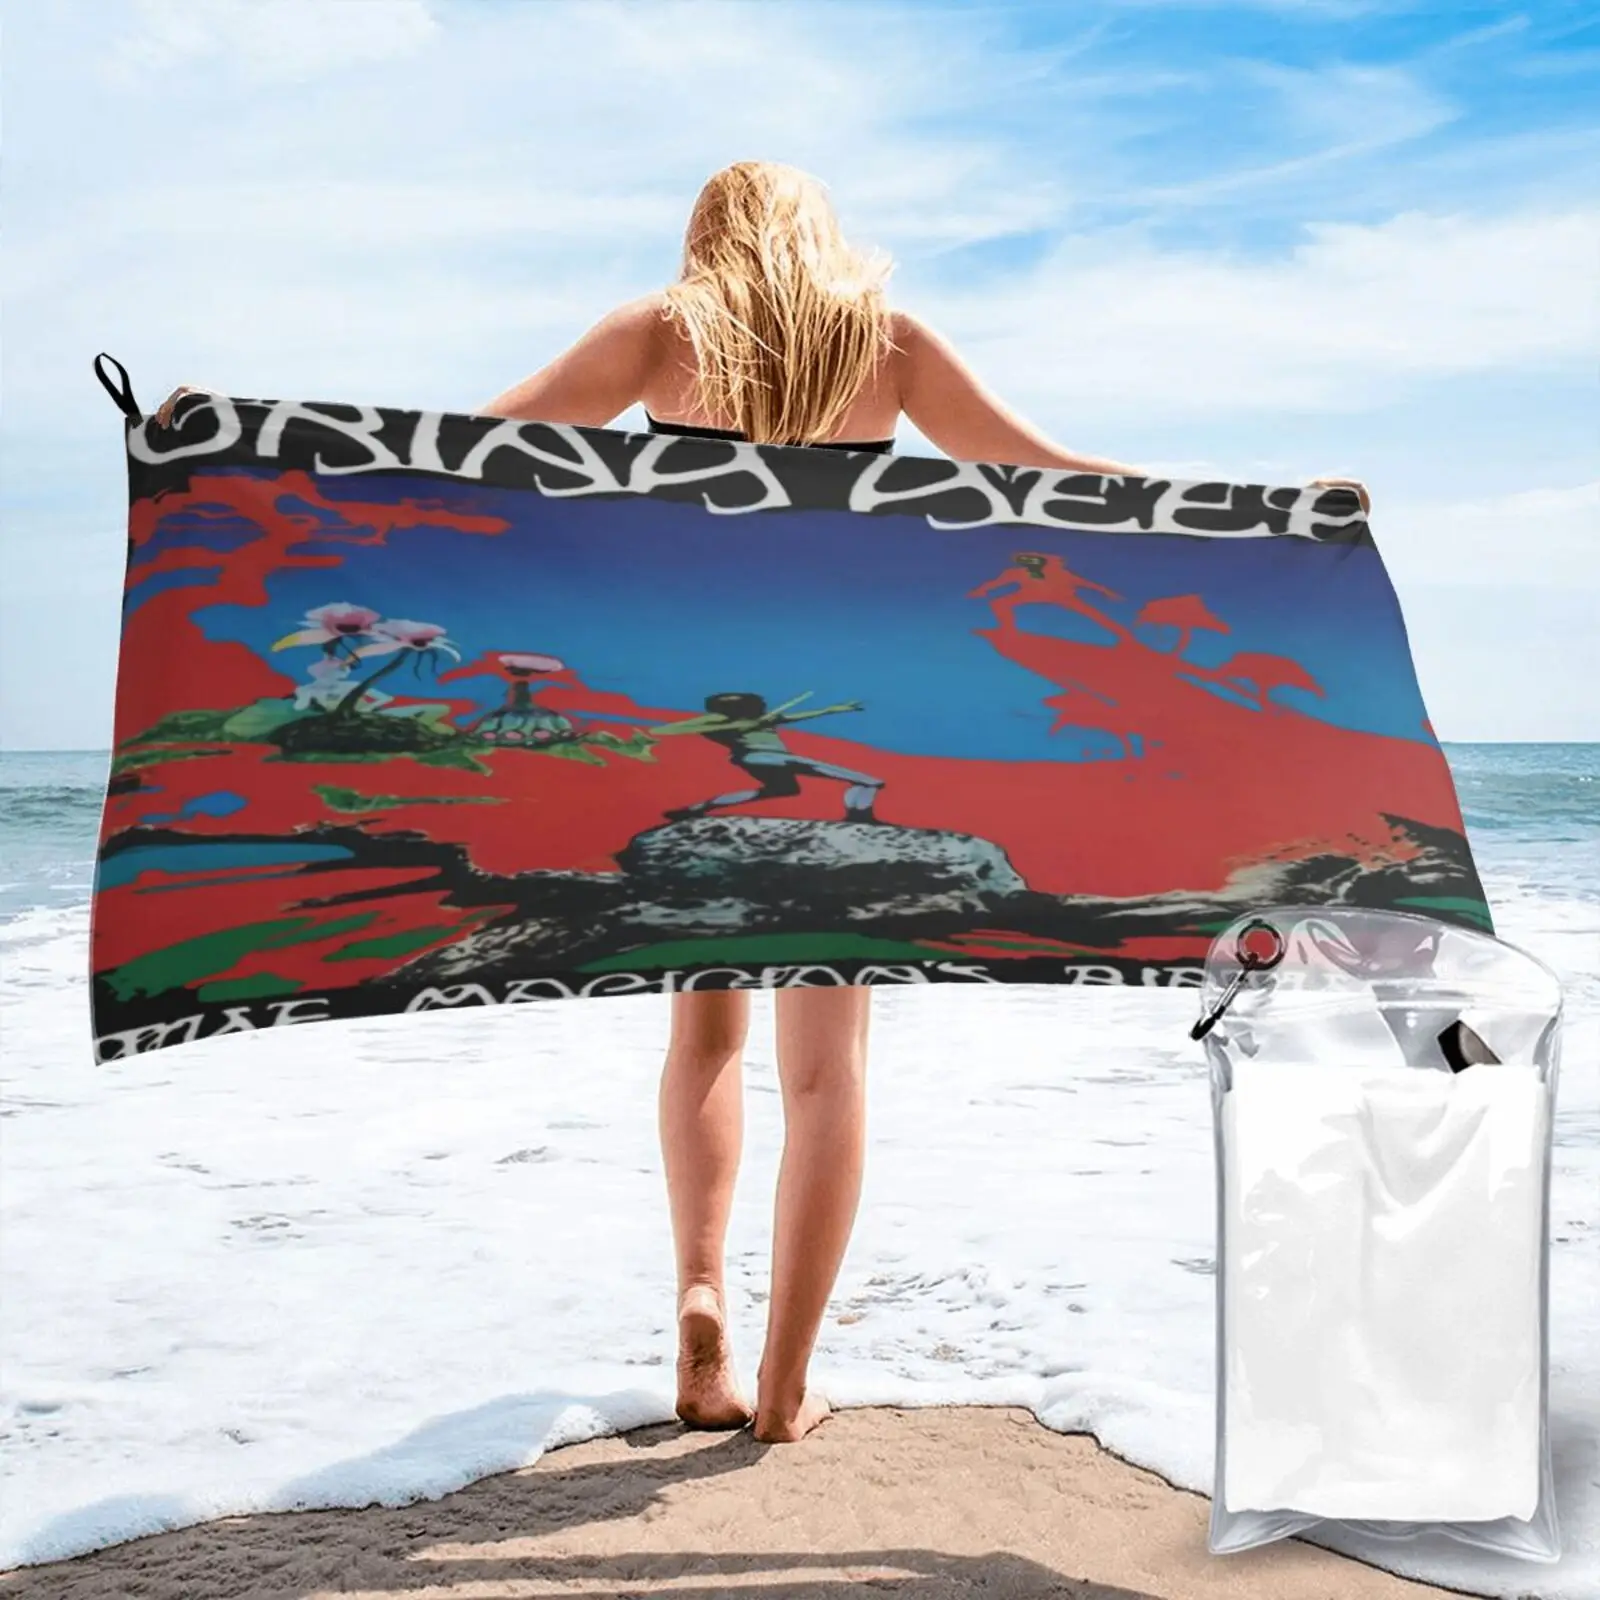 

Uriah Heep The Magician Birthday 1972, полотенце для ванны и душа, Пляжное махровое полотенце s, полотенце для волос, пляжное одеяло, пляжное одеяло для дома